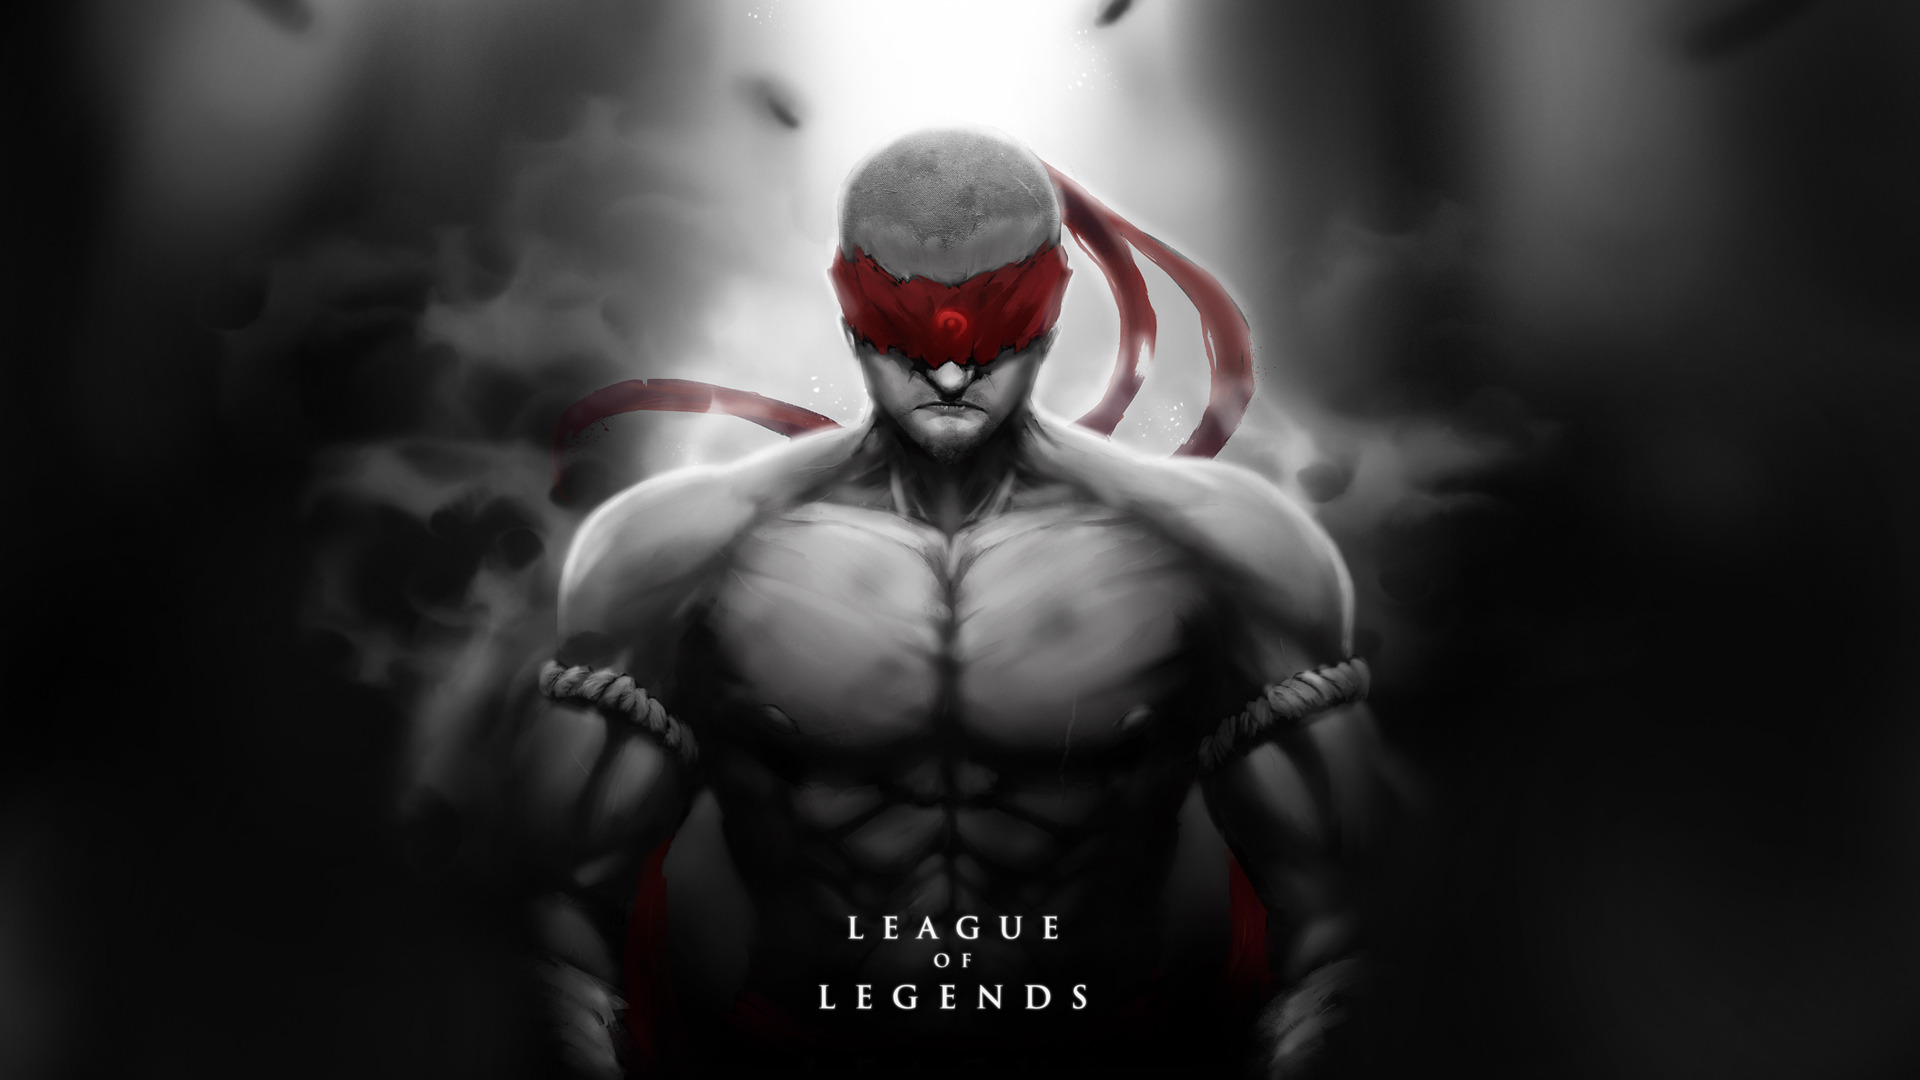 lee sin league of legends games hd wallpaper | Free hd wallpapers ...